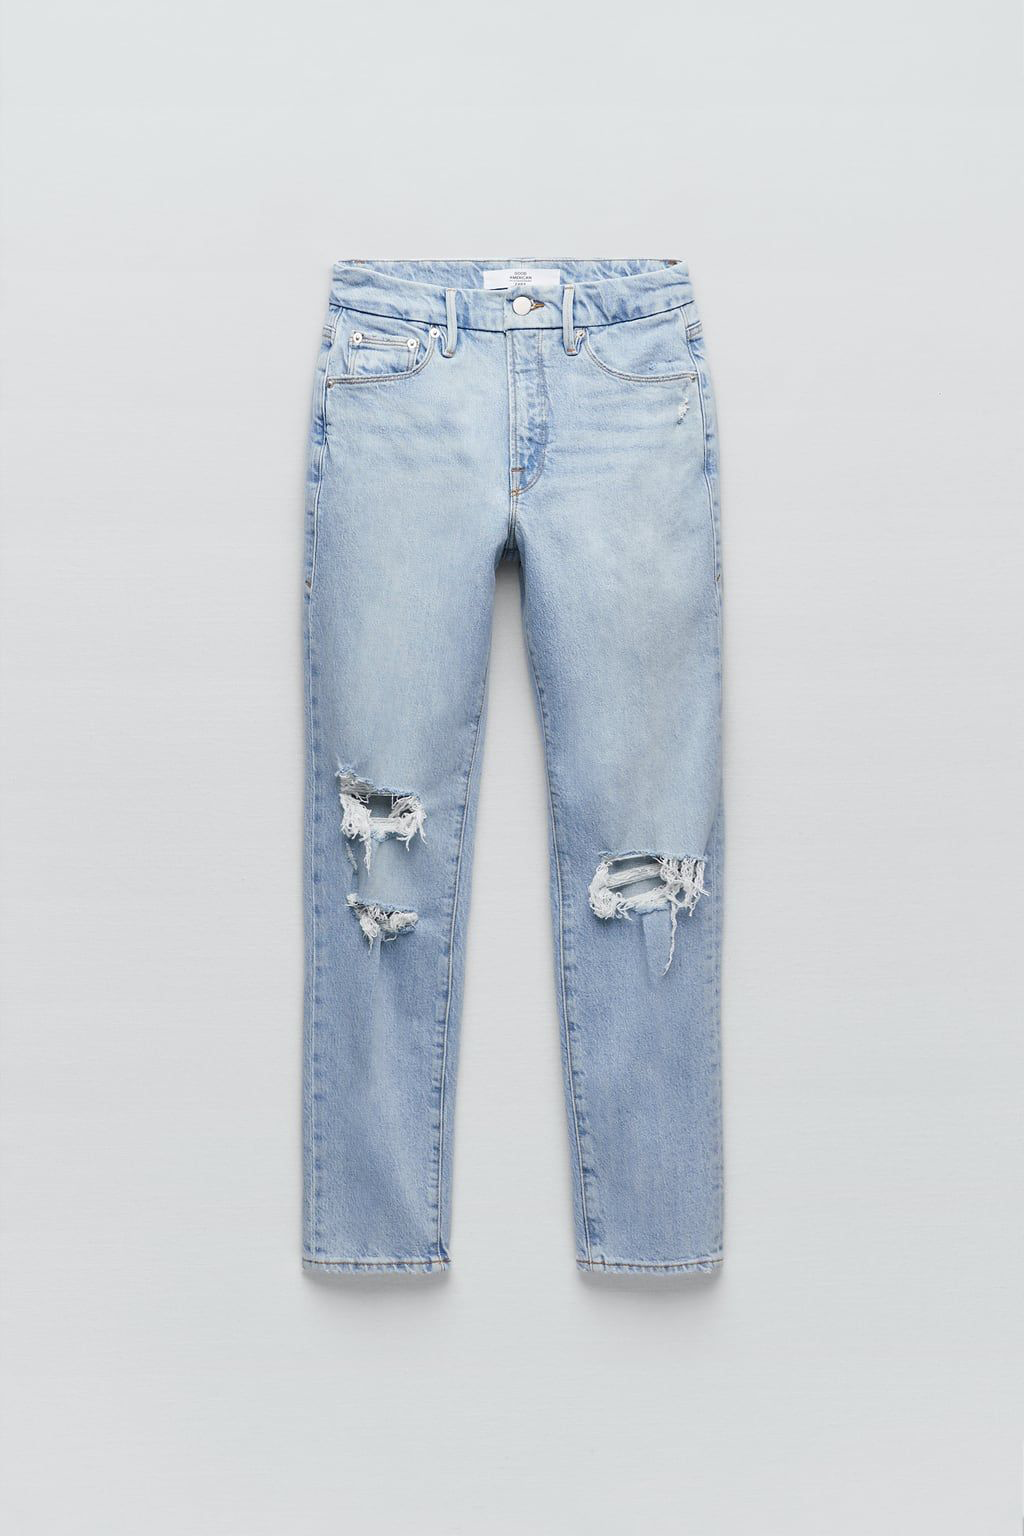 https://flyfiercefab.com/wp-content/uploads/2022/05/Good-American-X-Zara-Classic-Slim-Jeans.png